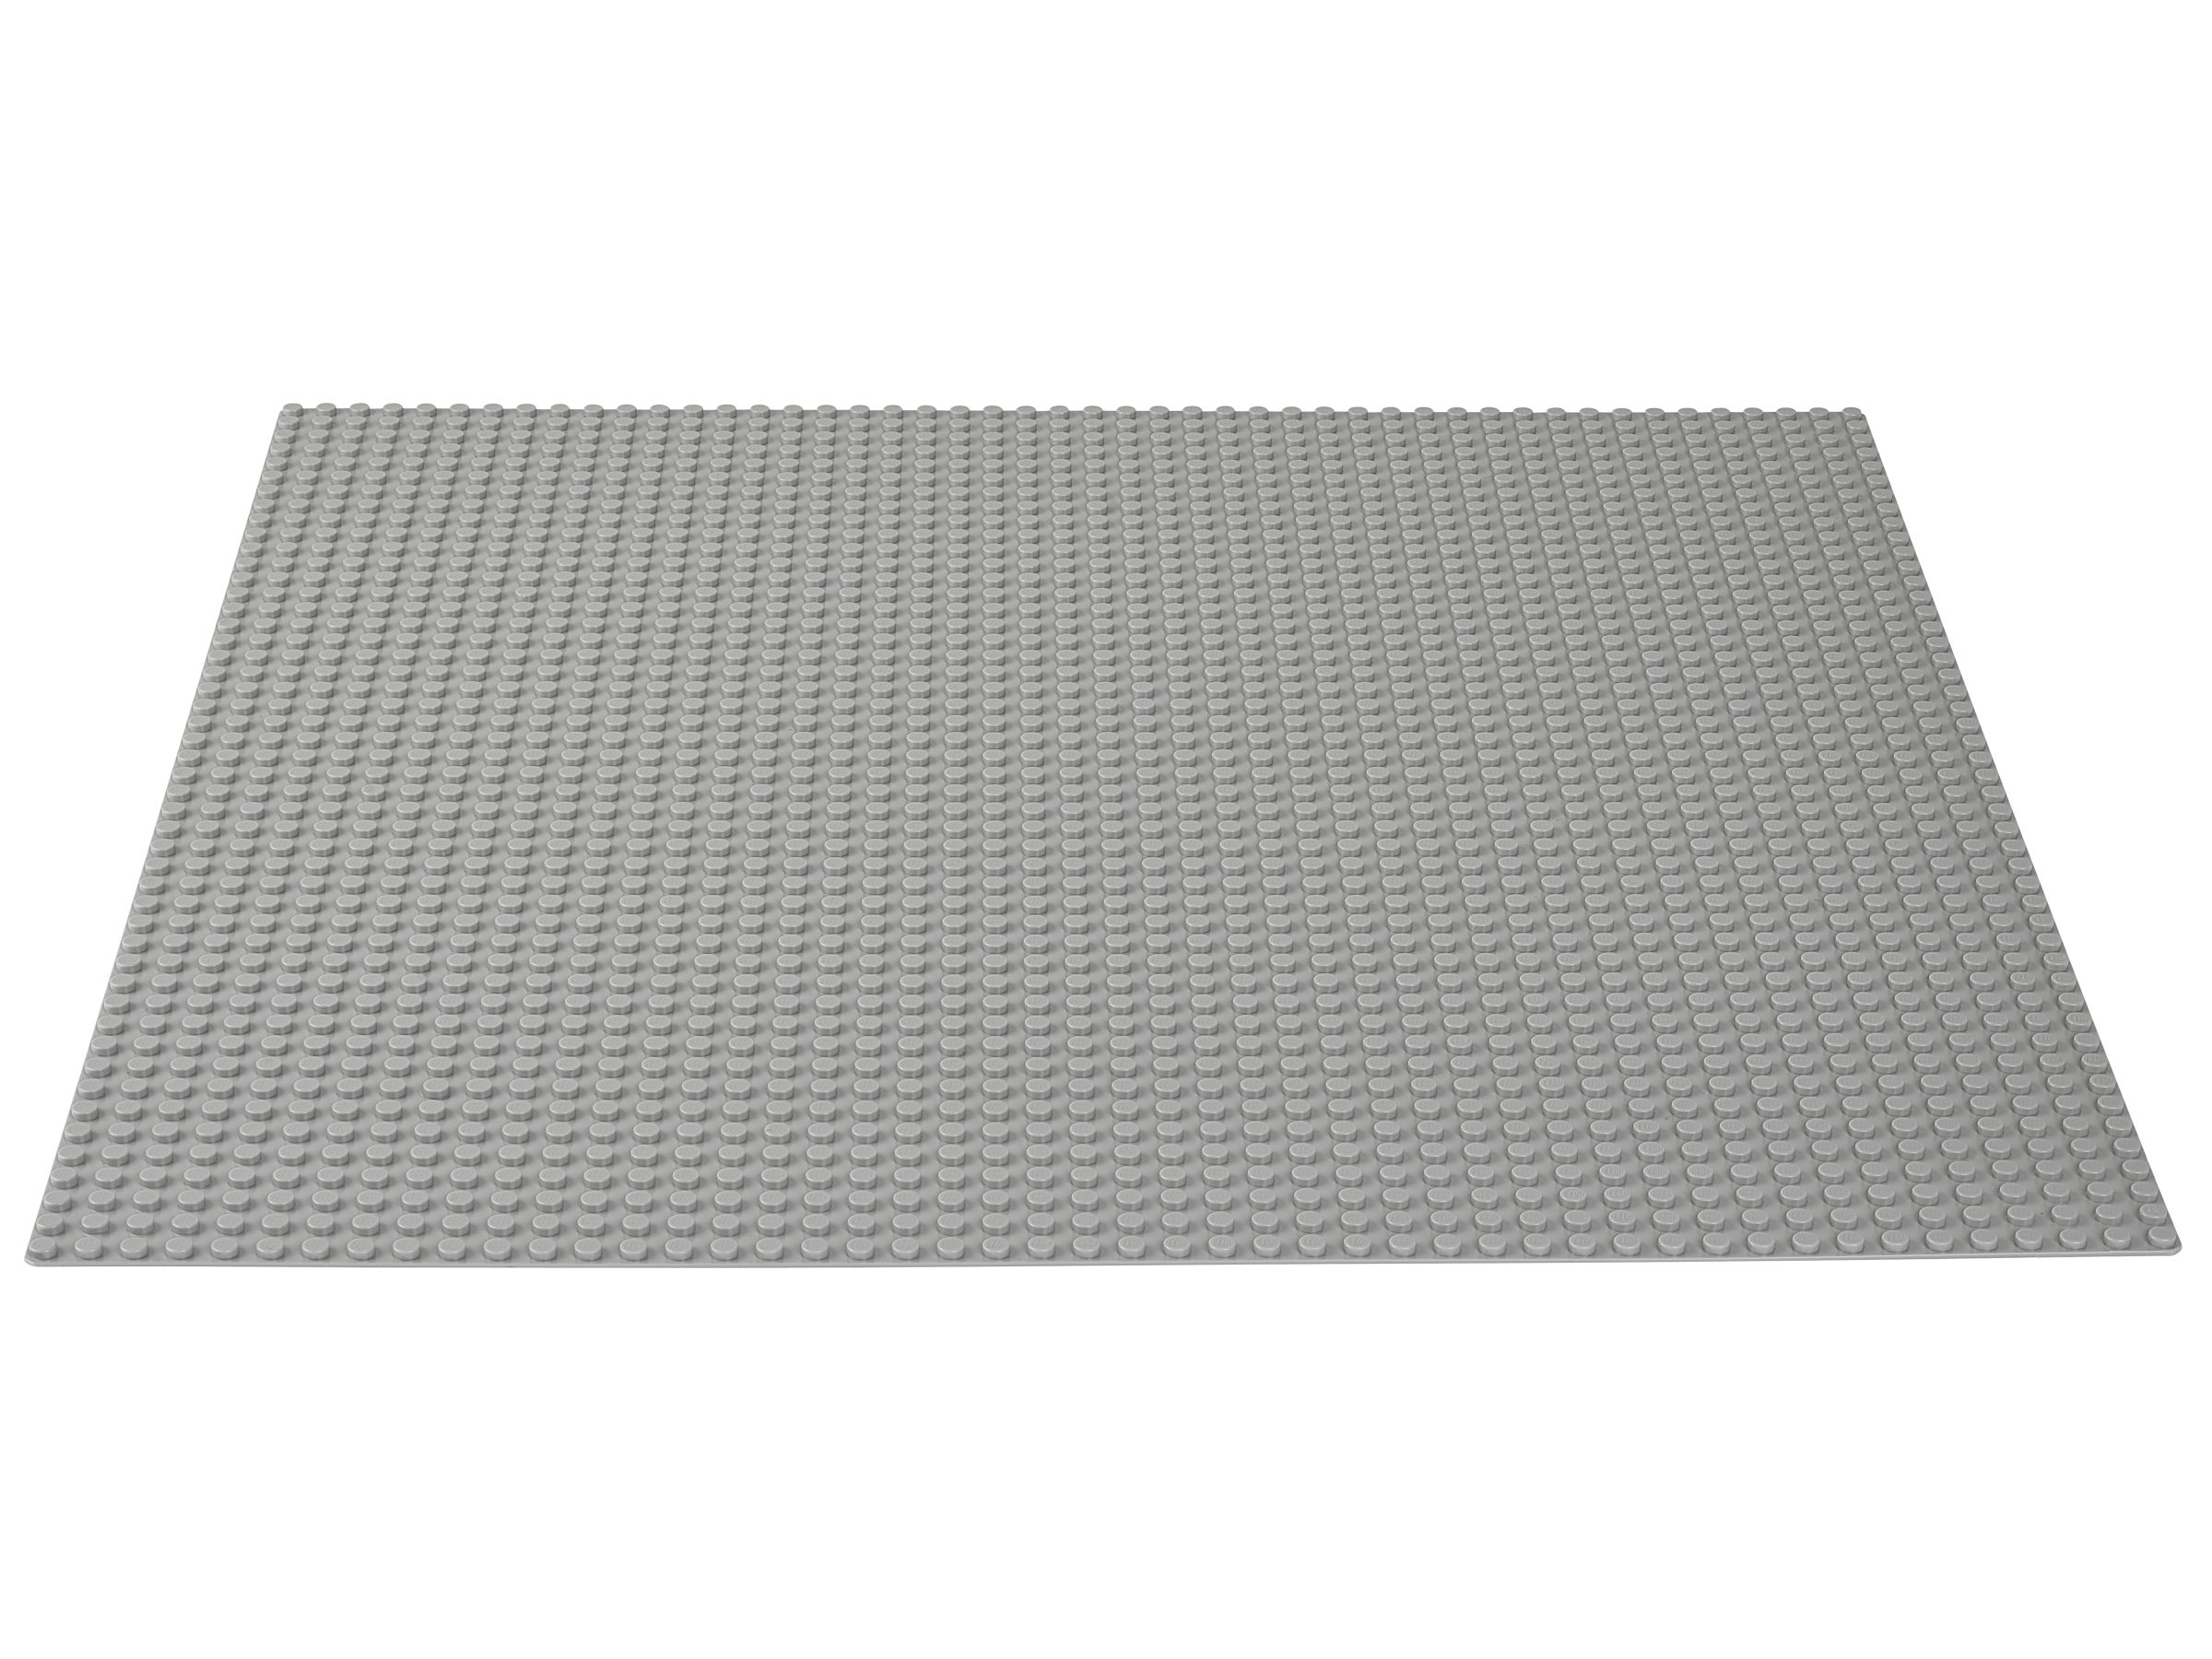 LEGO Classic 10701 48x48 Graue Grundplatte LEGO_10701.jpg